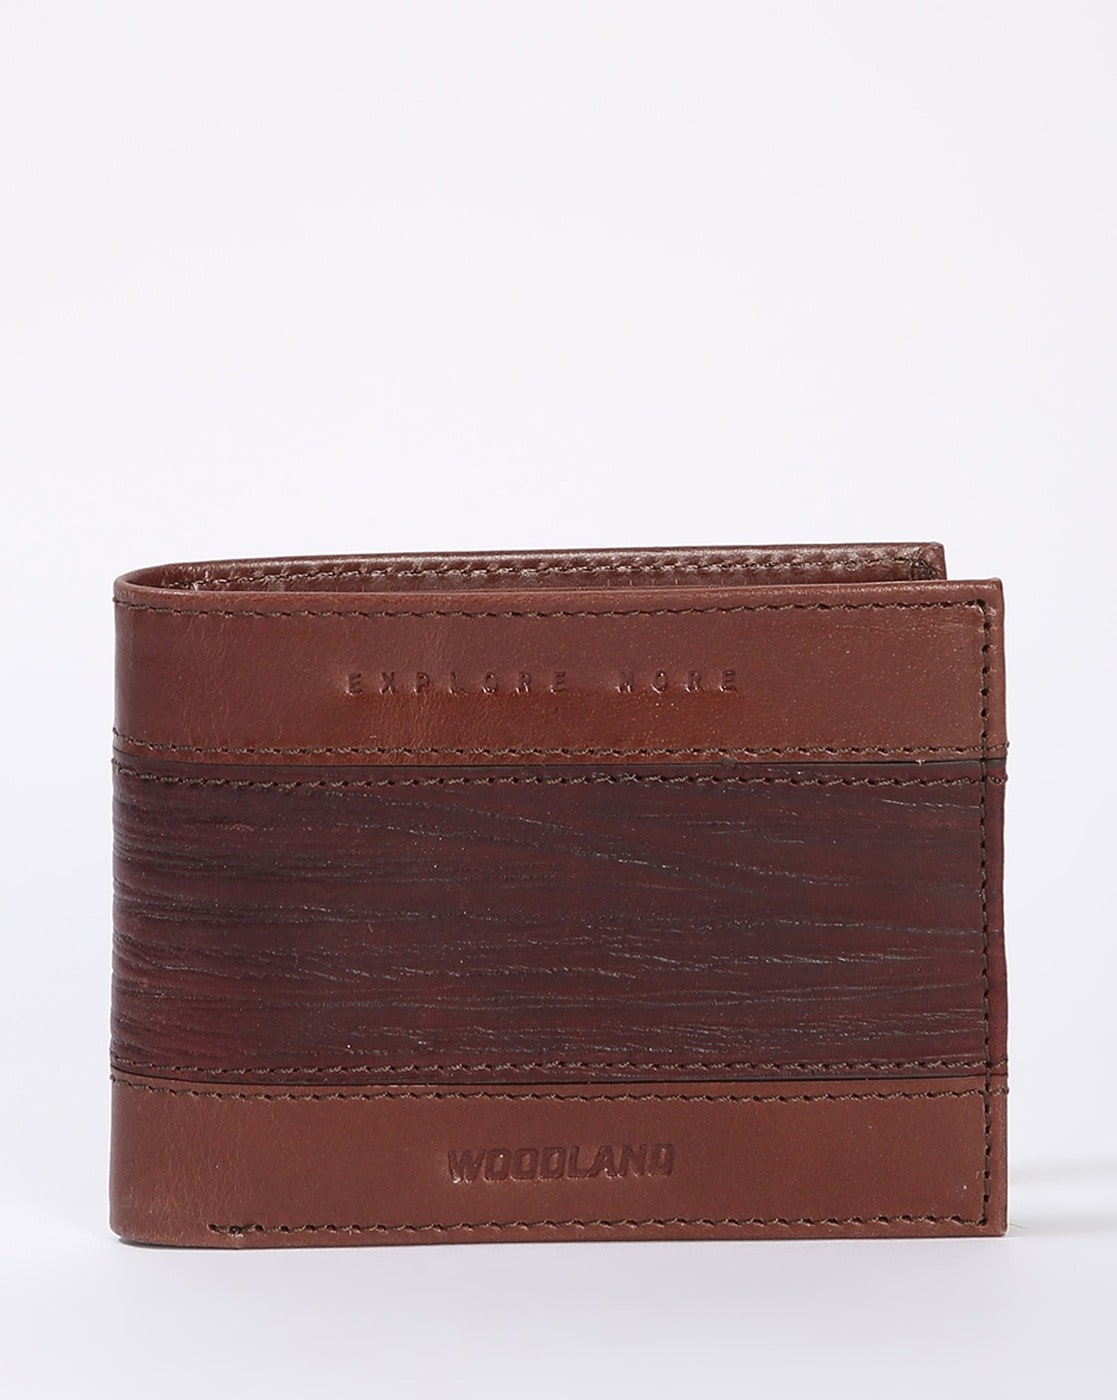 Woodland Leather Wallet for Men